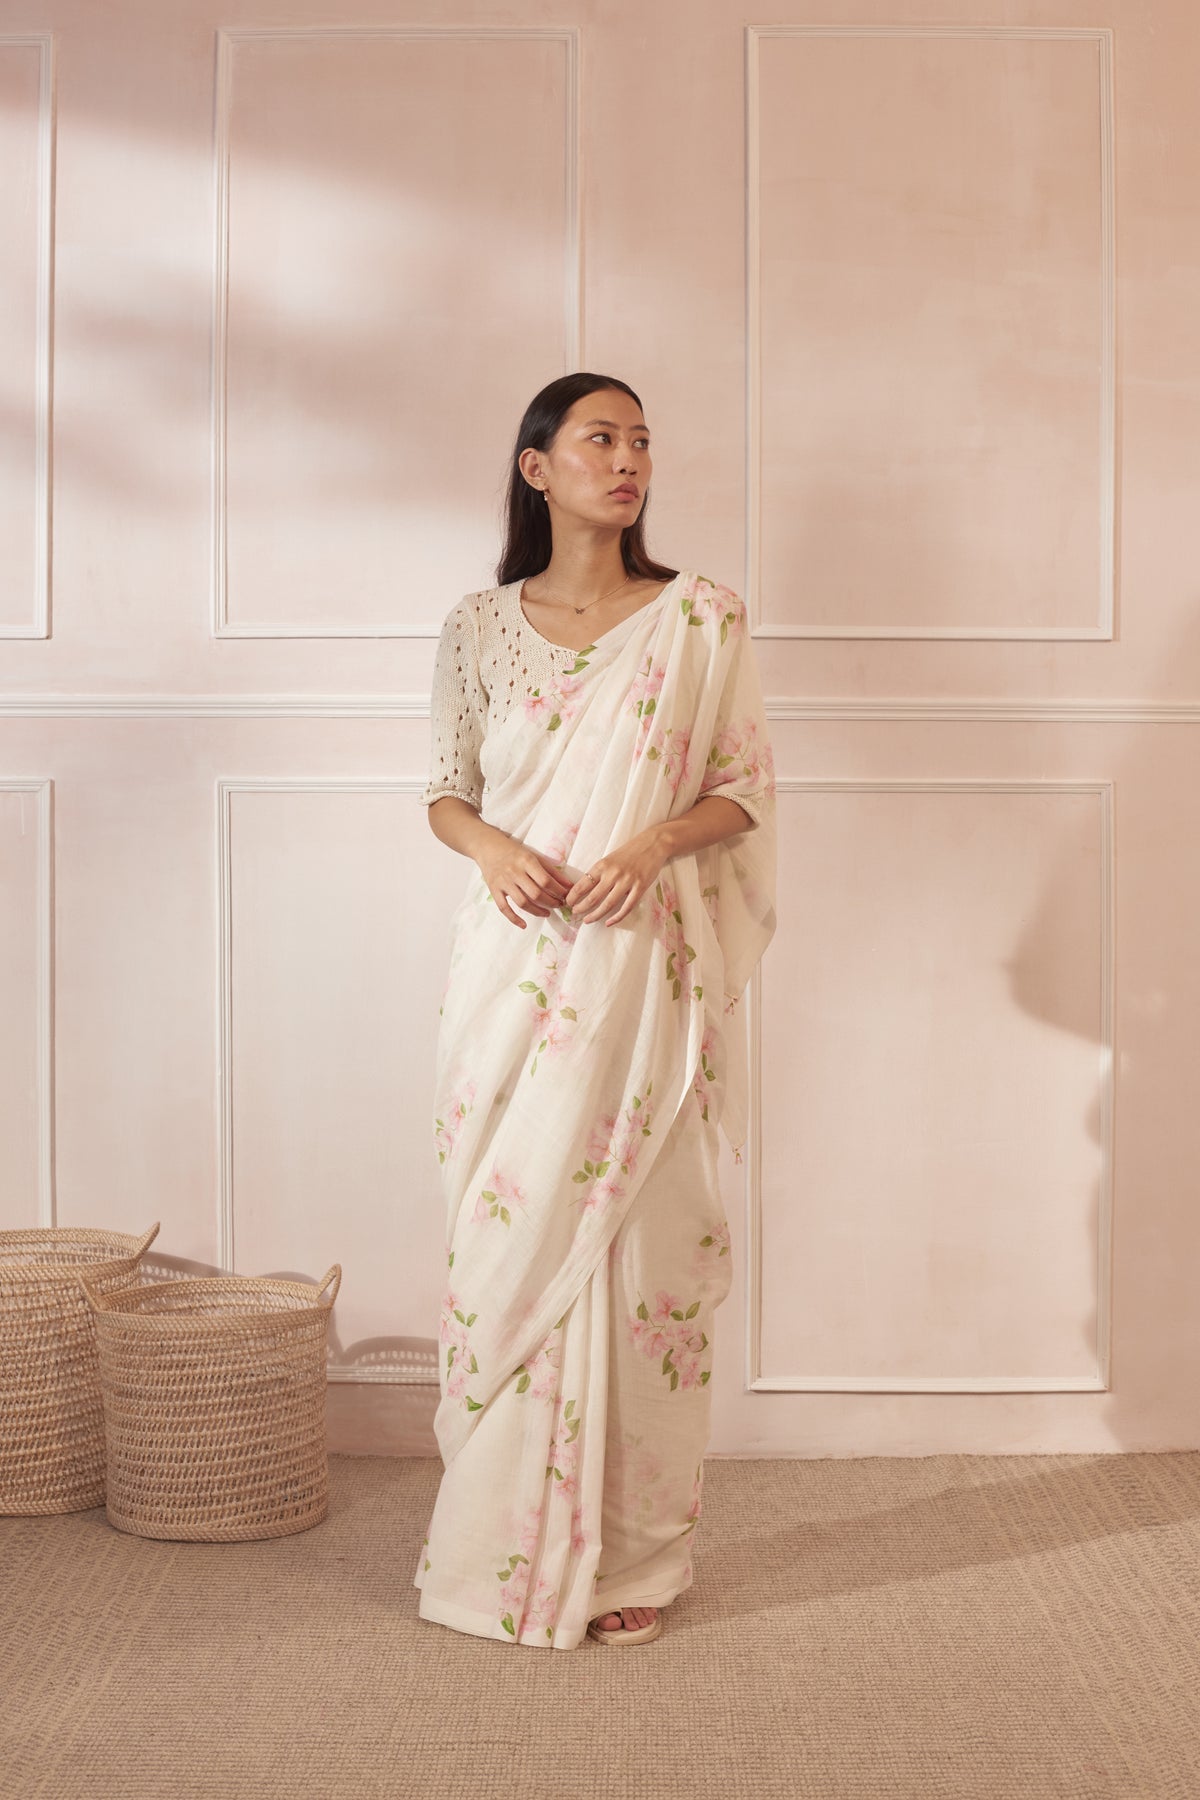 Handspun and handwoven cotton sari